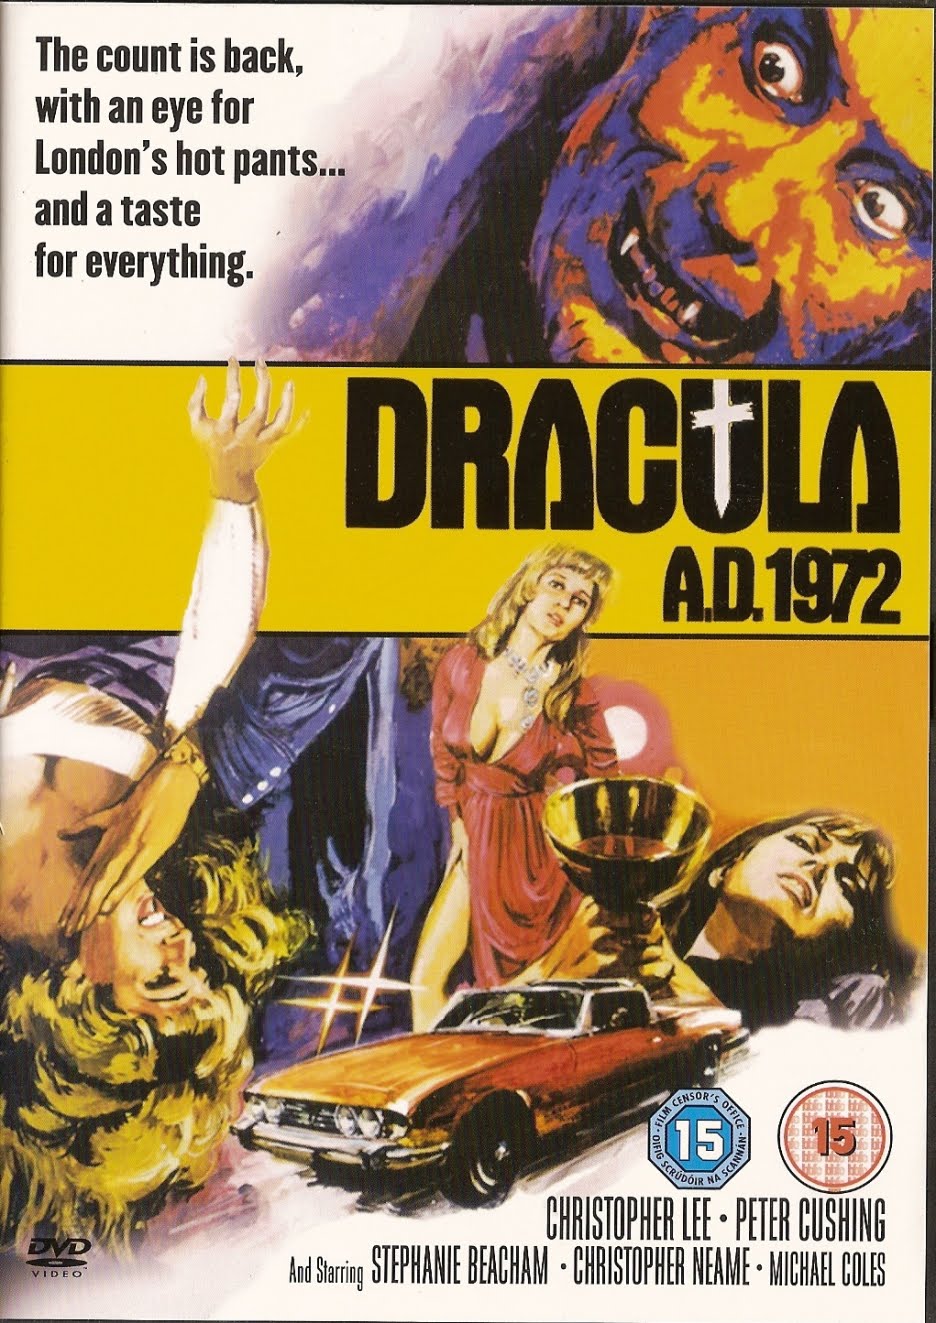 80s Lightning Reviews: Dracula AD 1972 (1972)